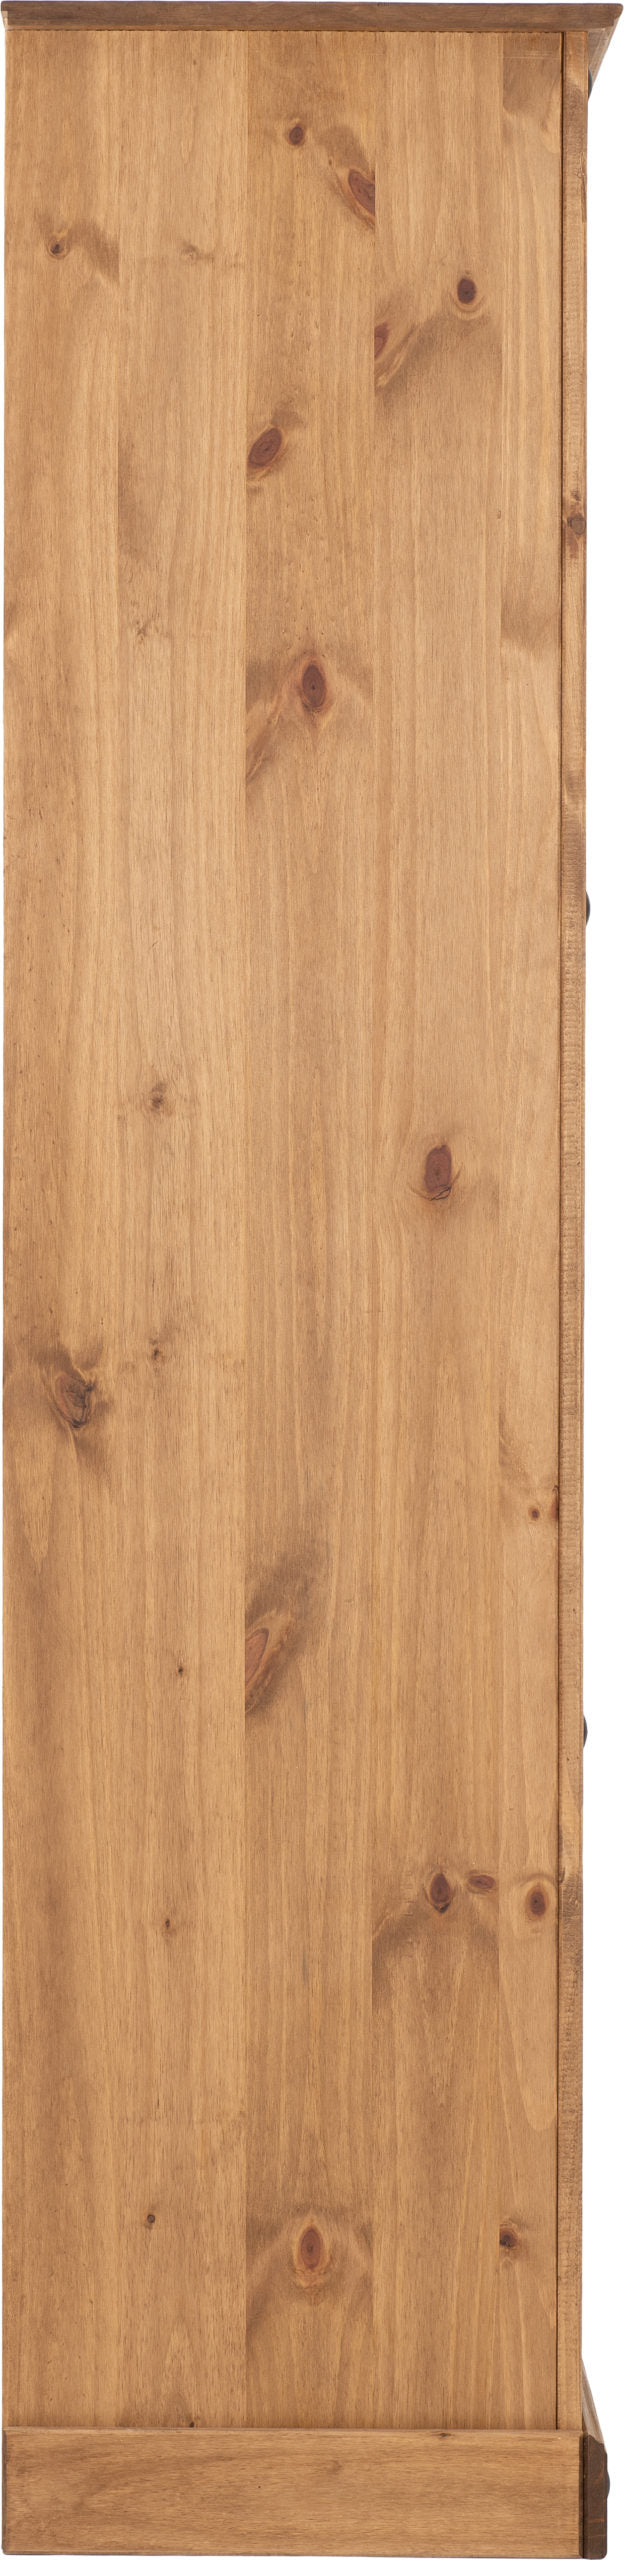 Corona Tall Bookcase - Distressed Waxed Pine